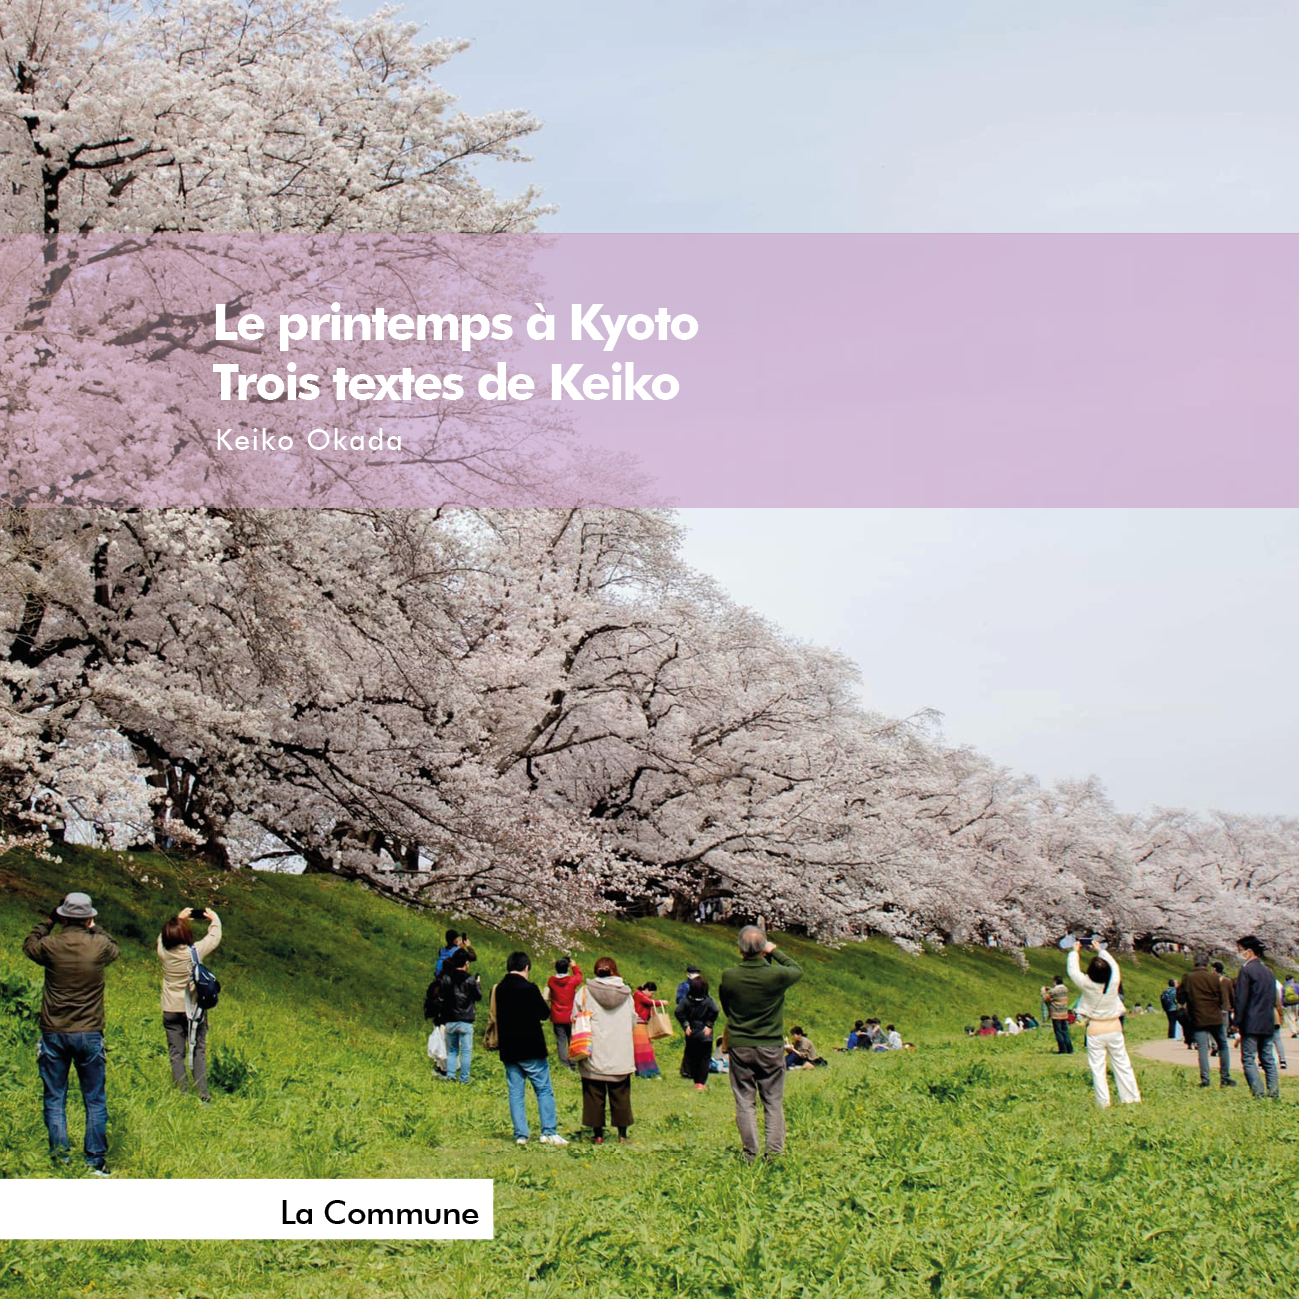 Le printemps à Kyoto. Trois textes de Keiko Okada.